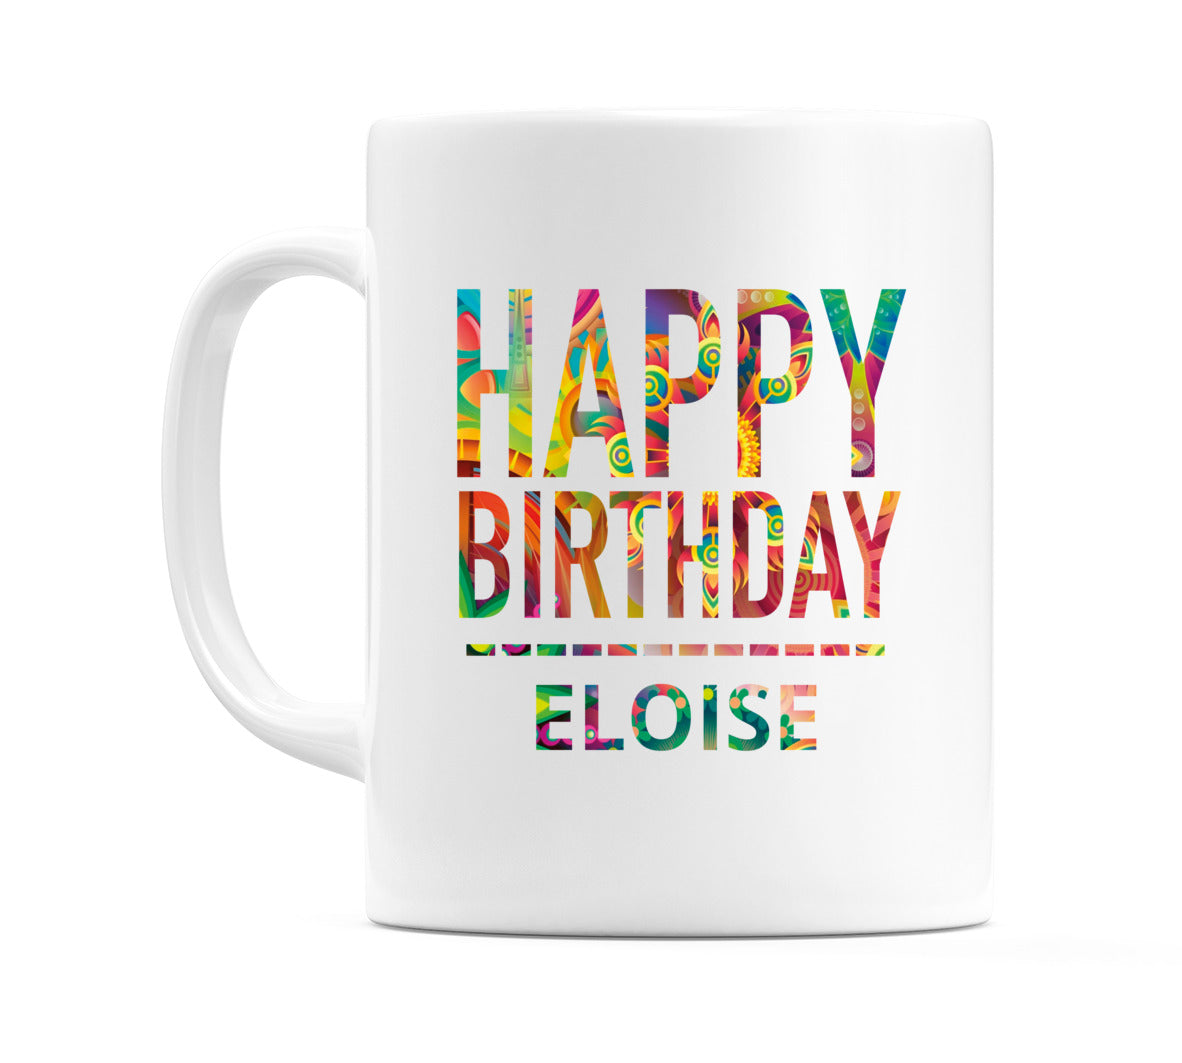 Happy Birthday Eloise (Tie Dye Effect) Mug Cup by WeDoMugs